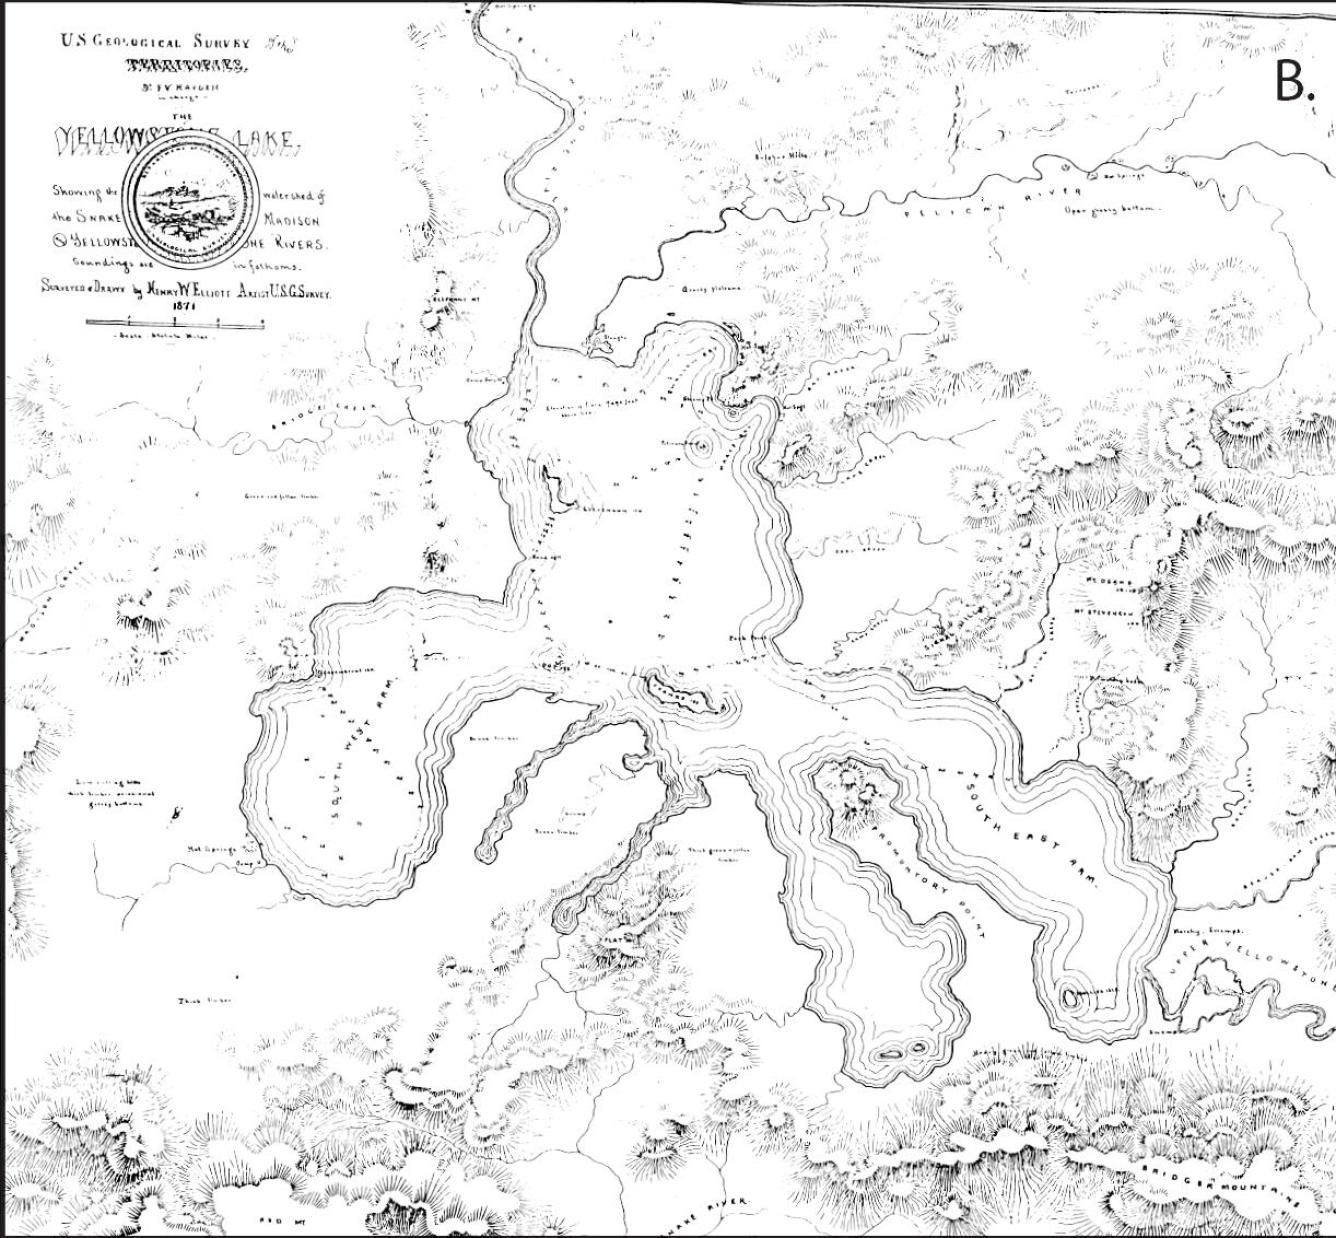 Henry Elliott’s 1871 map of Yellowstone Lake